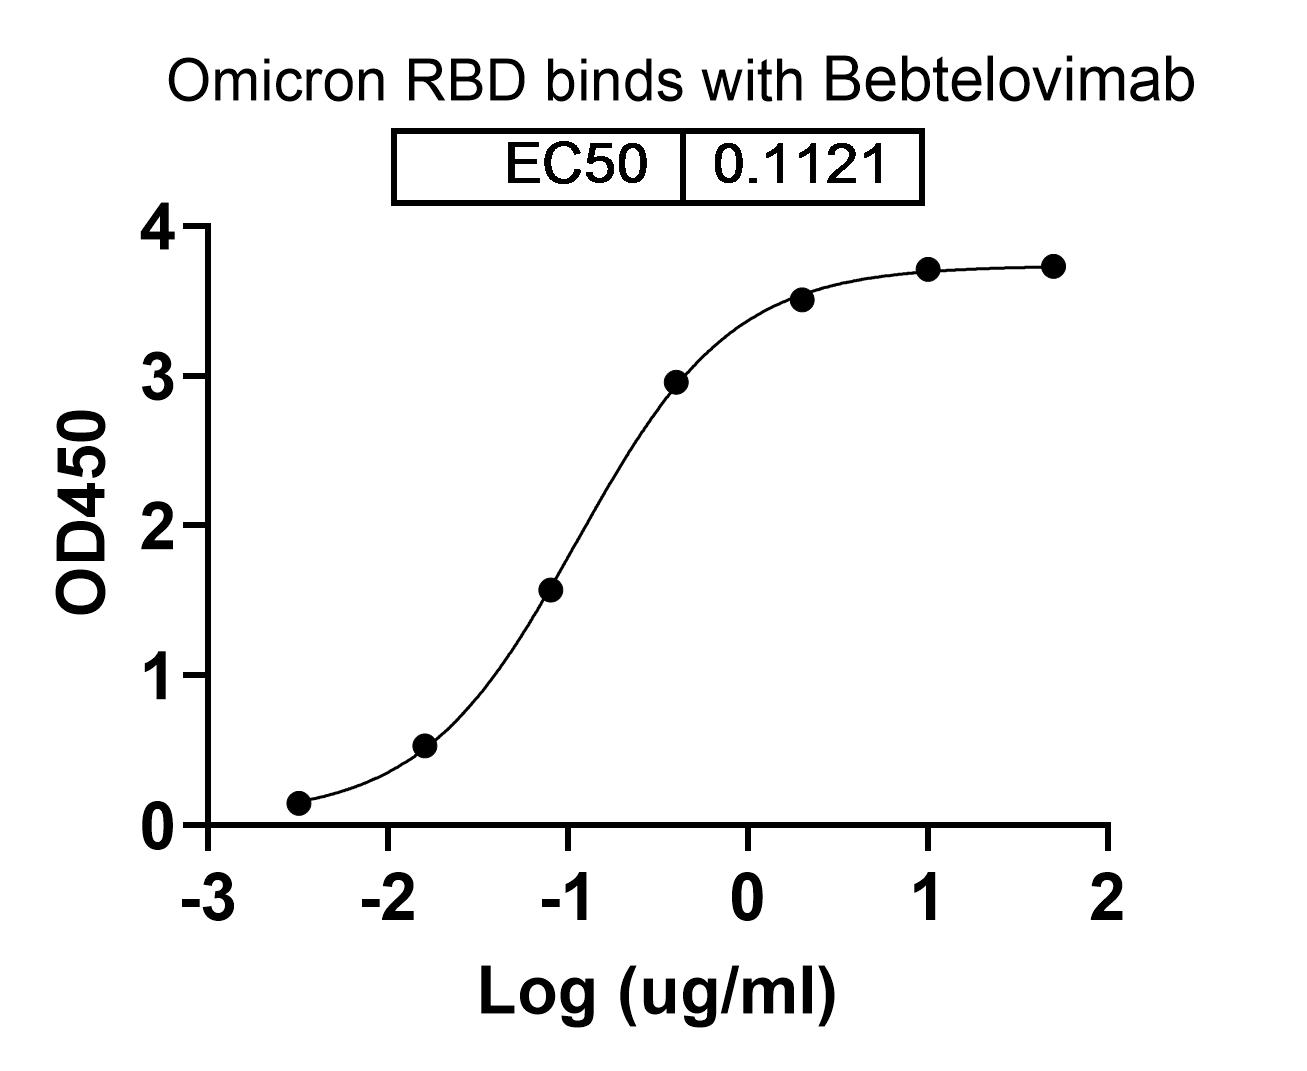 Immobilized Recombinant SARS-CoV-2 Spike RBD Protein (N-His Tag)(Omicron) at 2.0 ug/mL (100 uL/well) can bind SARS-CoV-2 Spike RBD (Bebtelovimab biosimilar) Neutralizing Antibody, the EC50 is 0.1121 ug/mL.